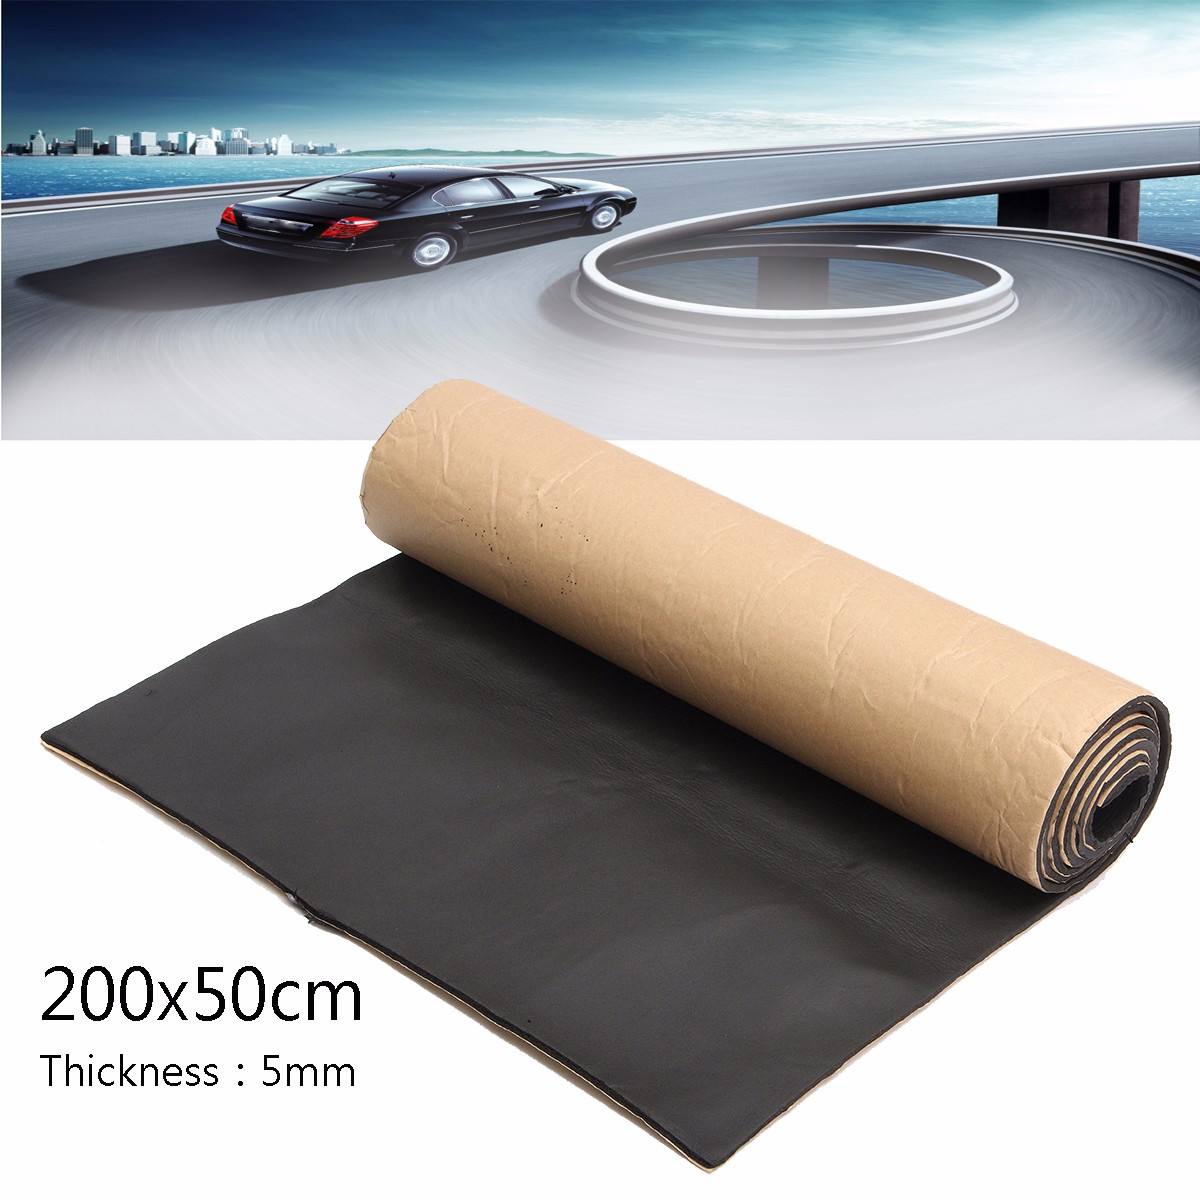 200cmx50cm-Car-Sound-Proofing-Deadening-Anti-noise-Sound-Insulation-Cotton-Heat-Closed-Cell-Foam-1099471